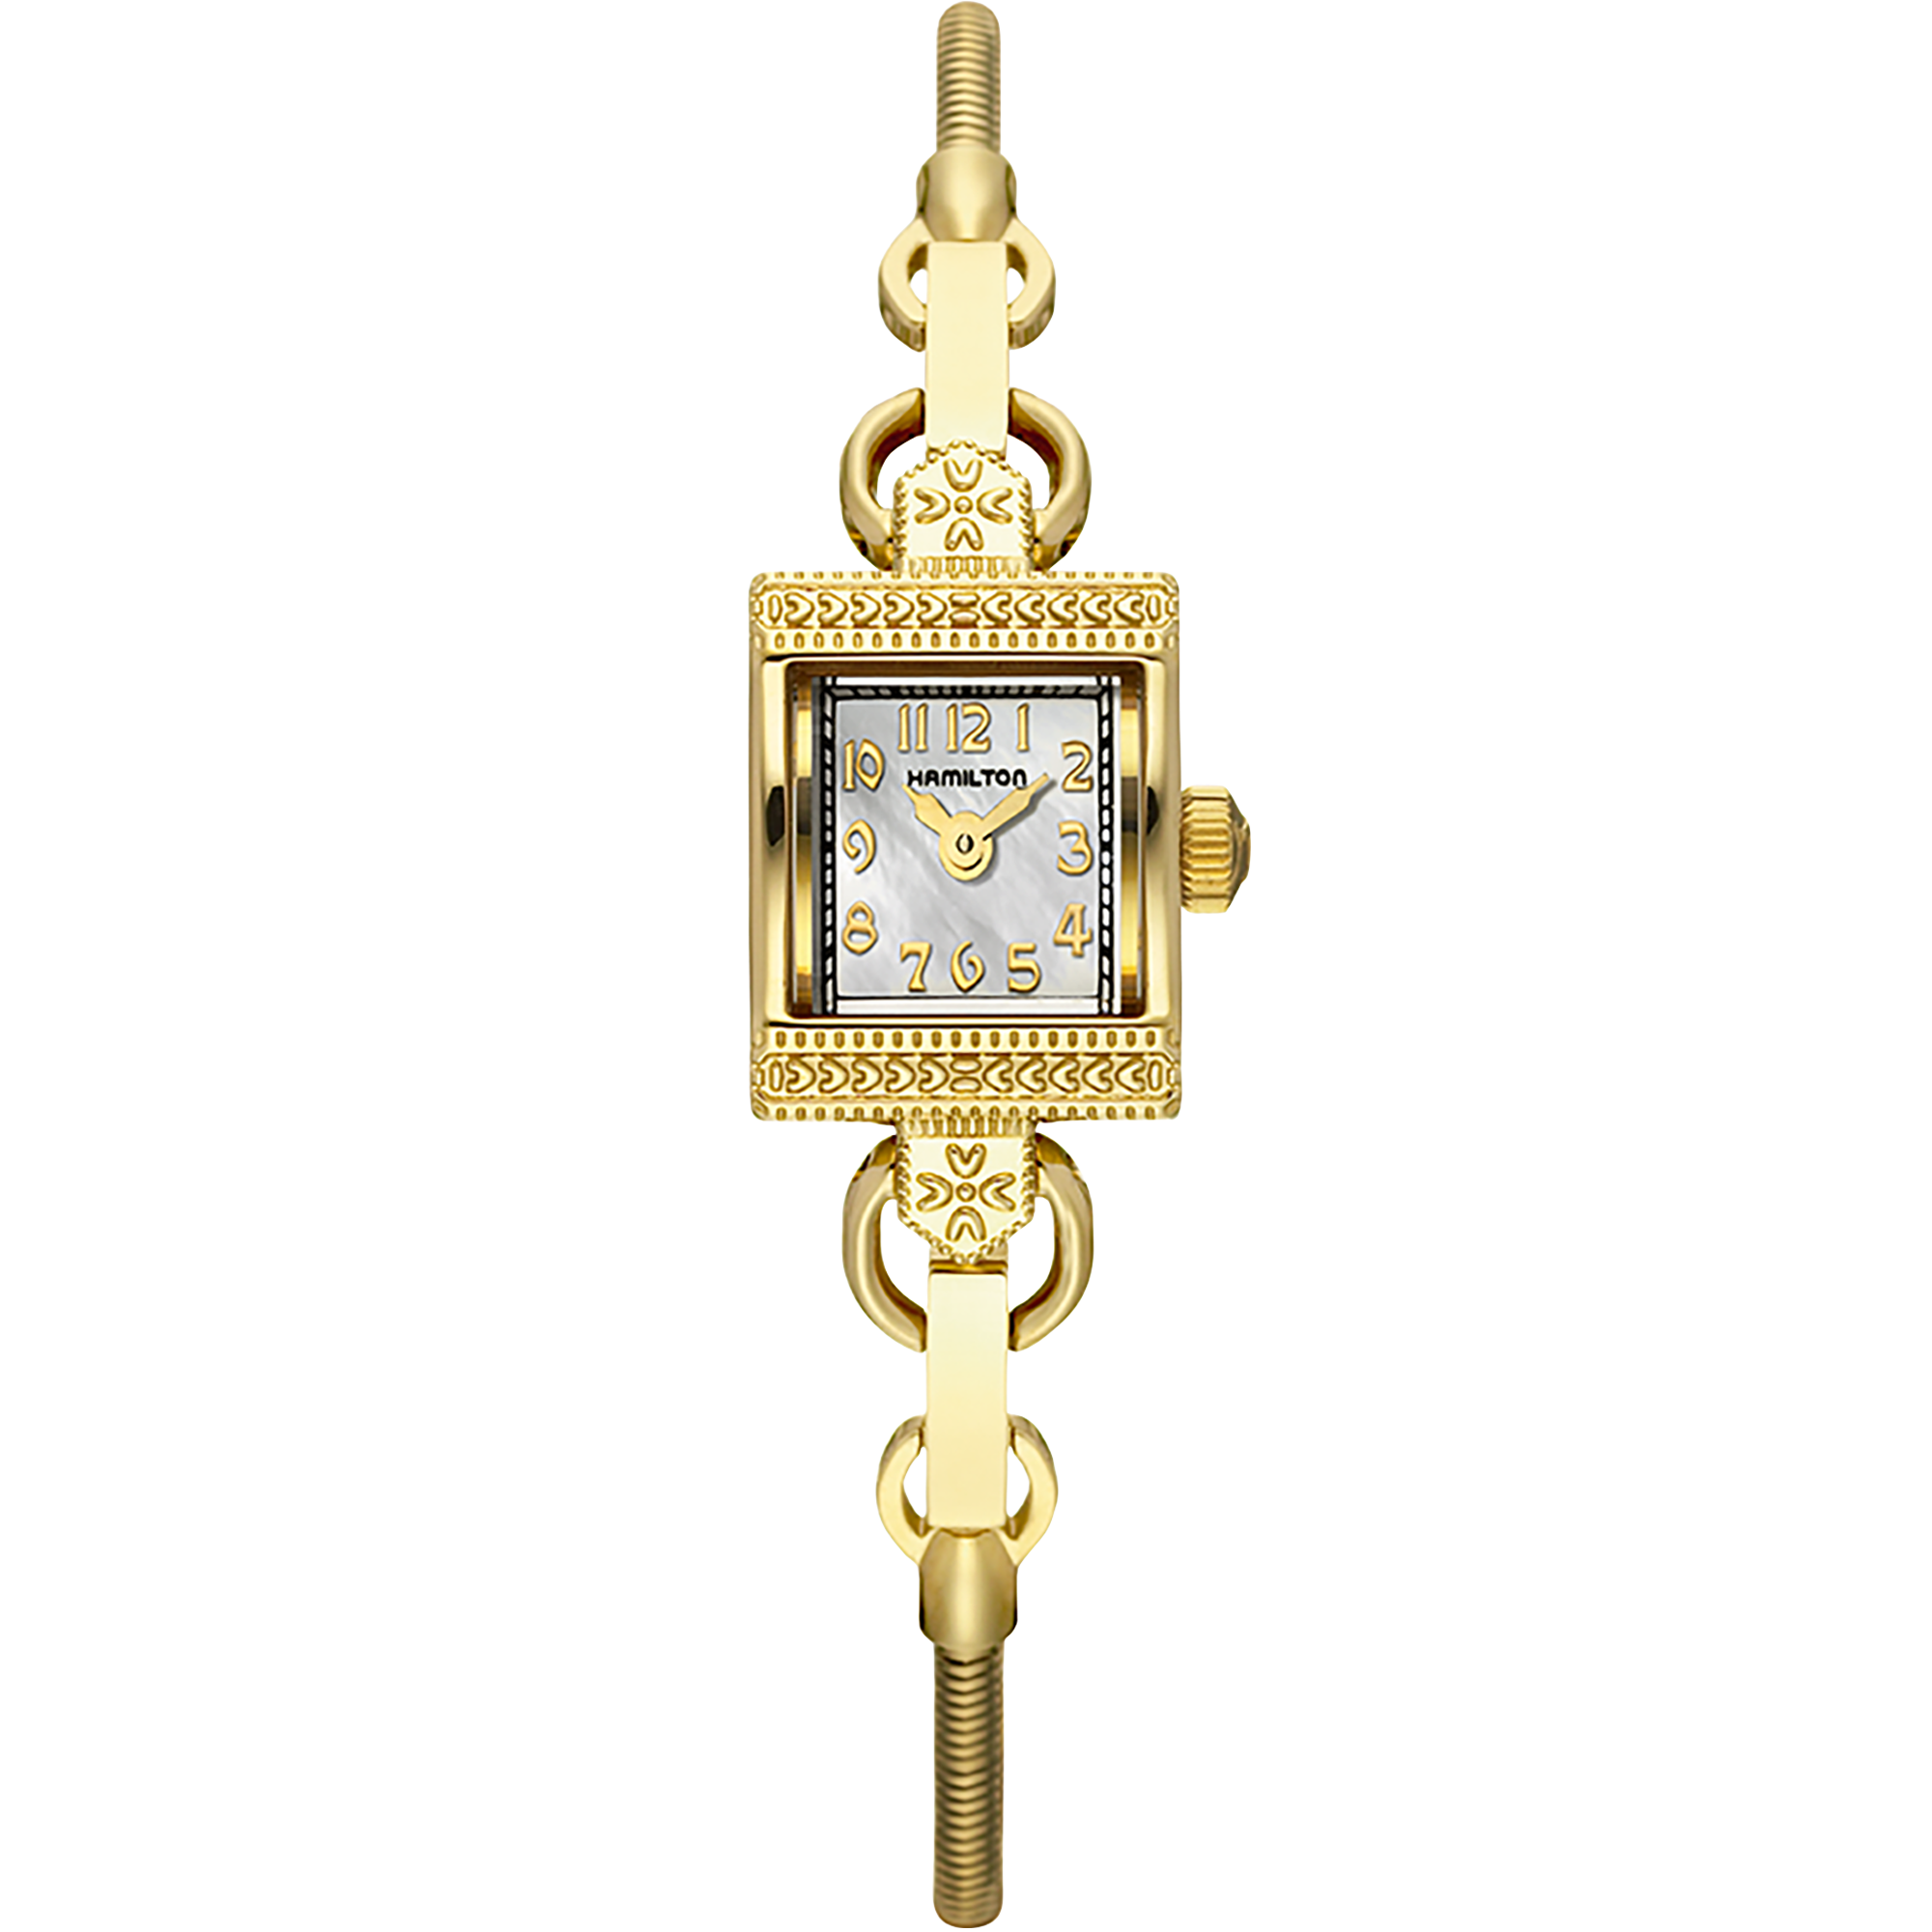 American Classic Lady Hamilton Vintage Quartz Watch - H31231113